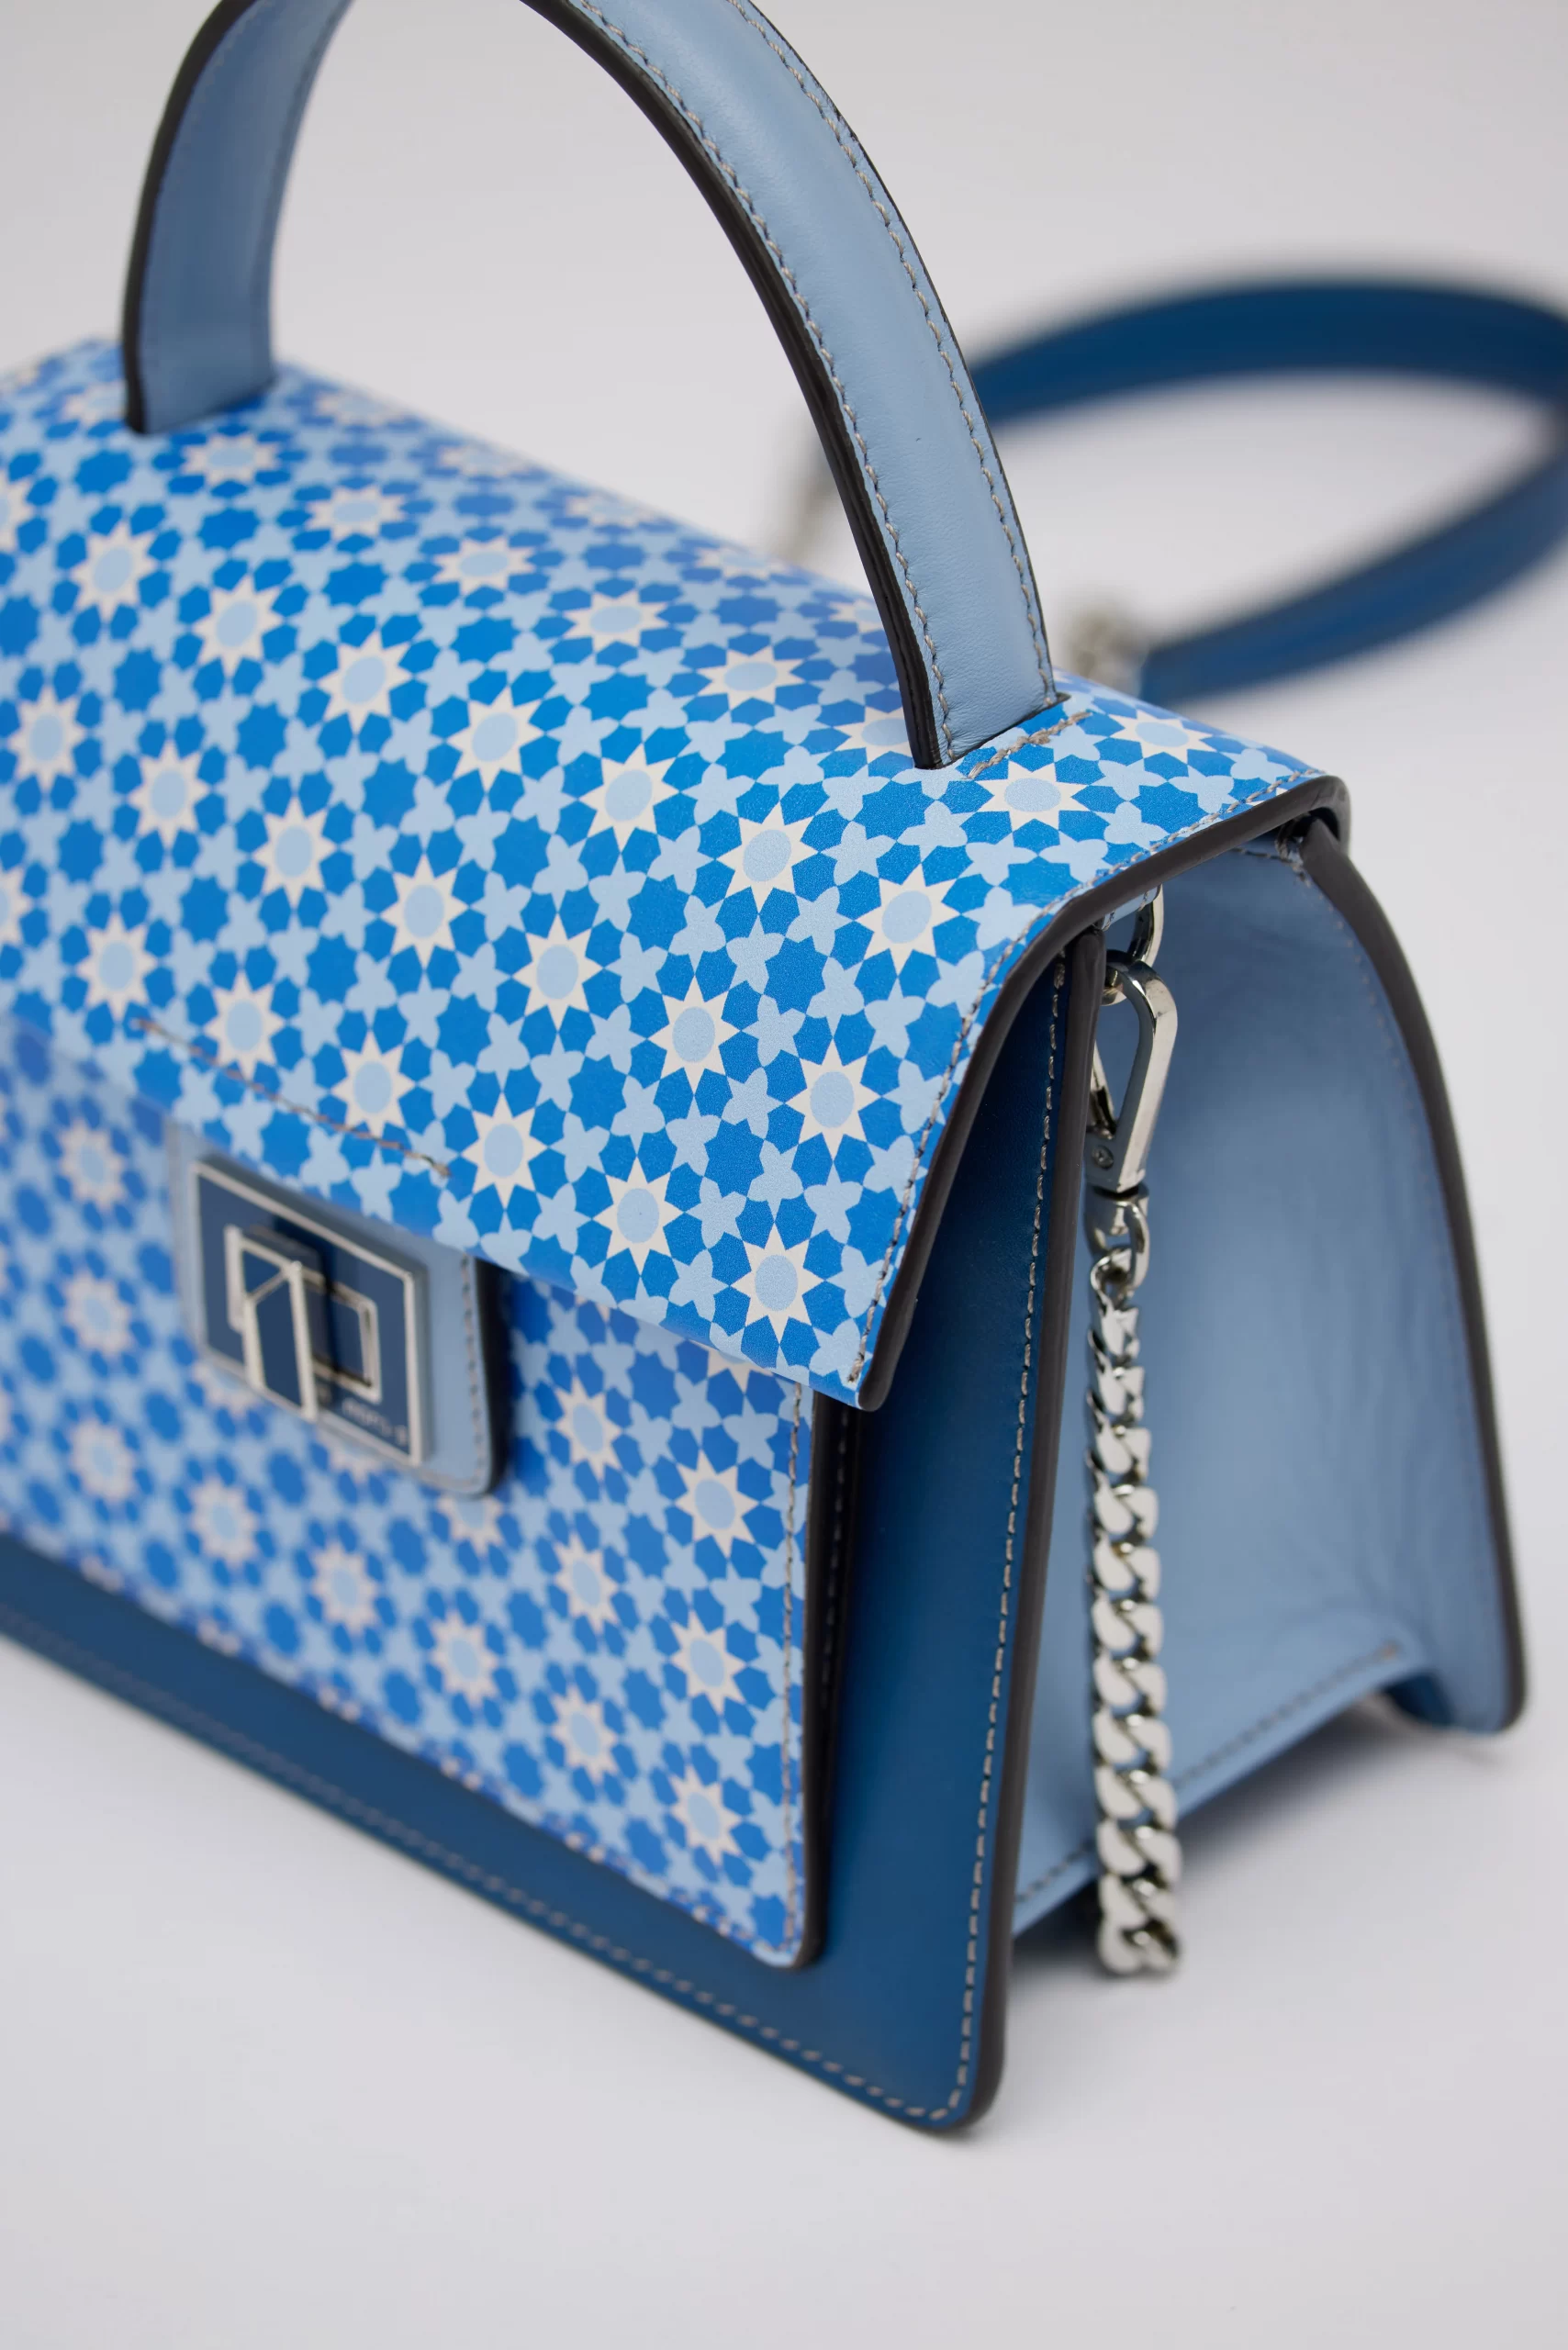 nora's luxury italian leather handbags